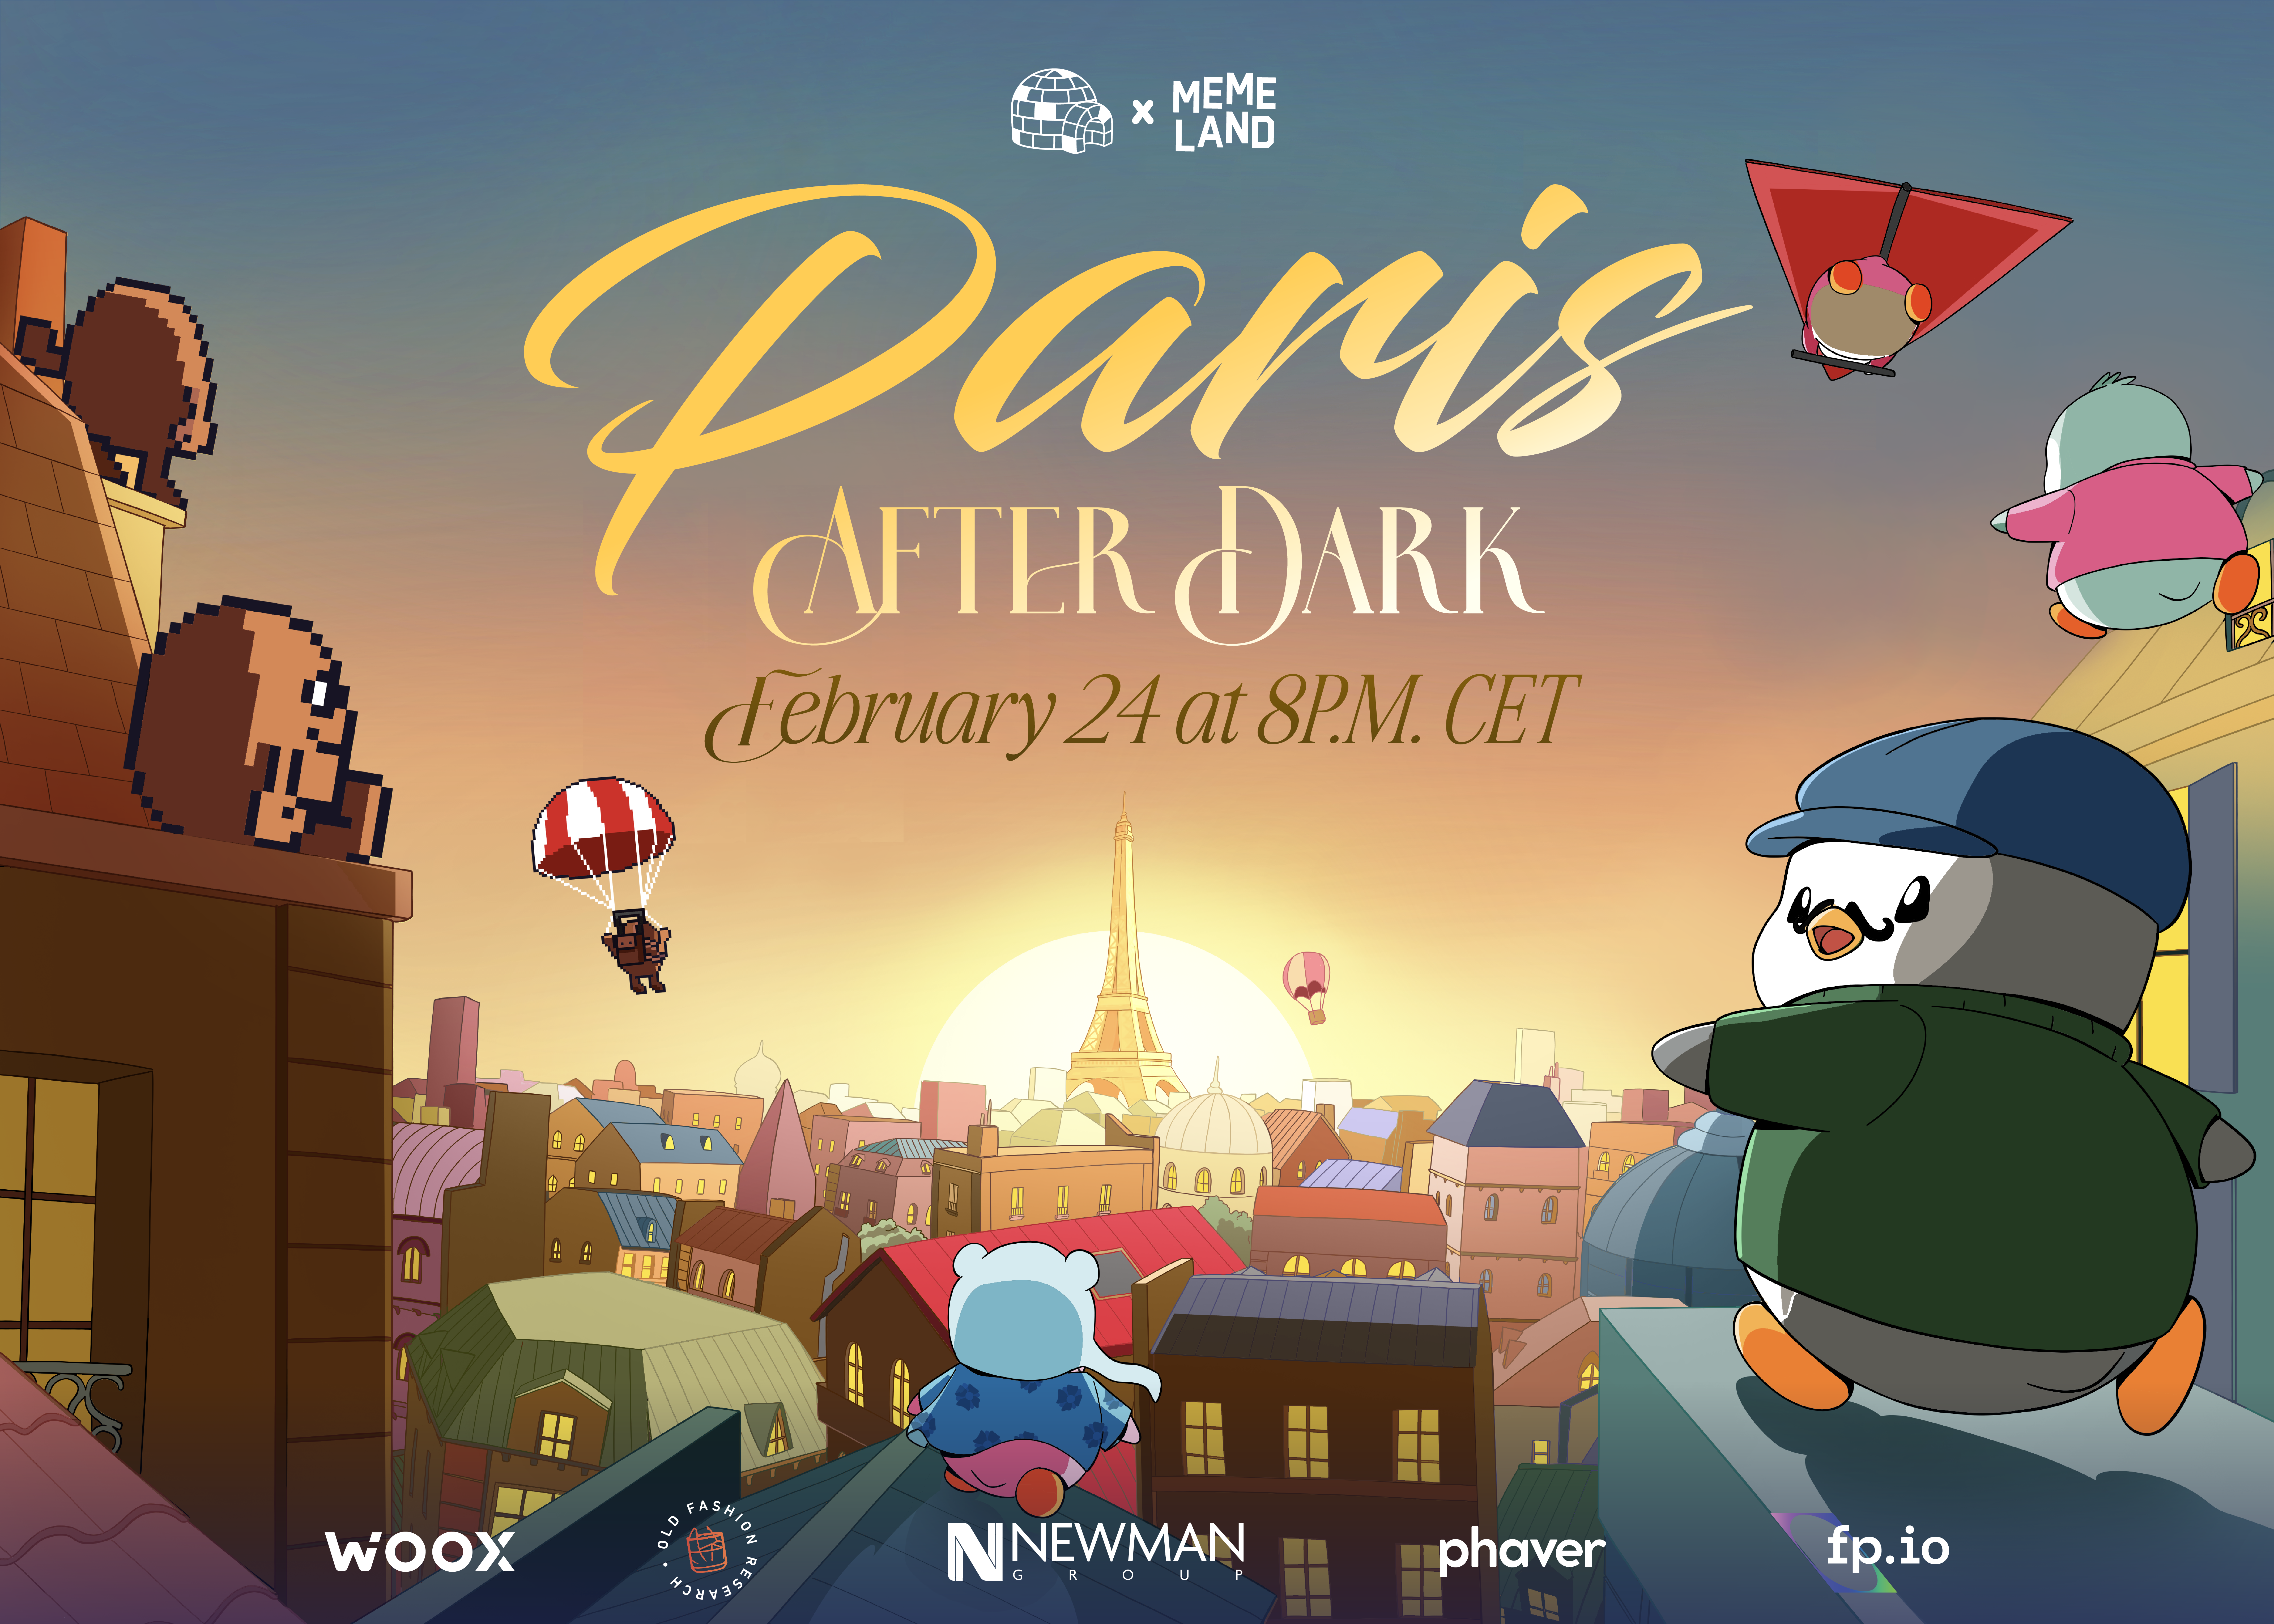 Pudgy Penguins x Memeland: Paris After Dark background image